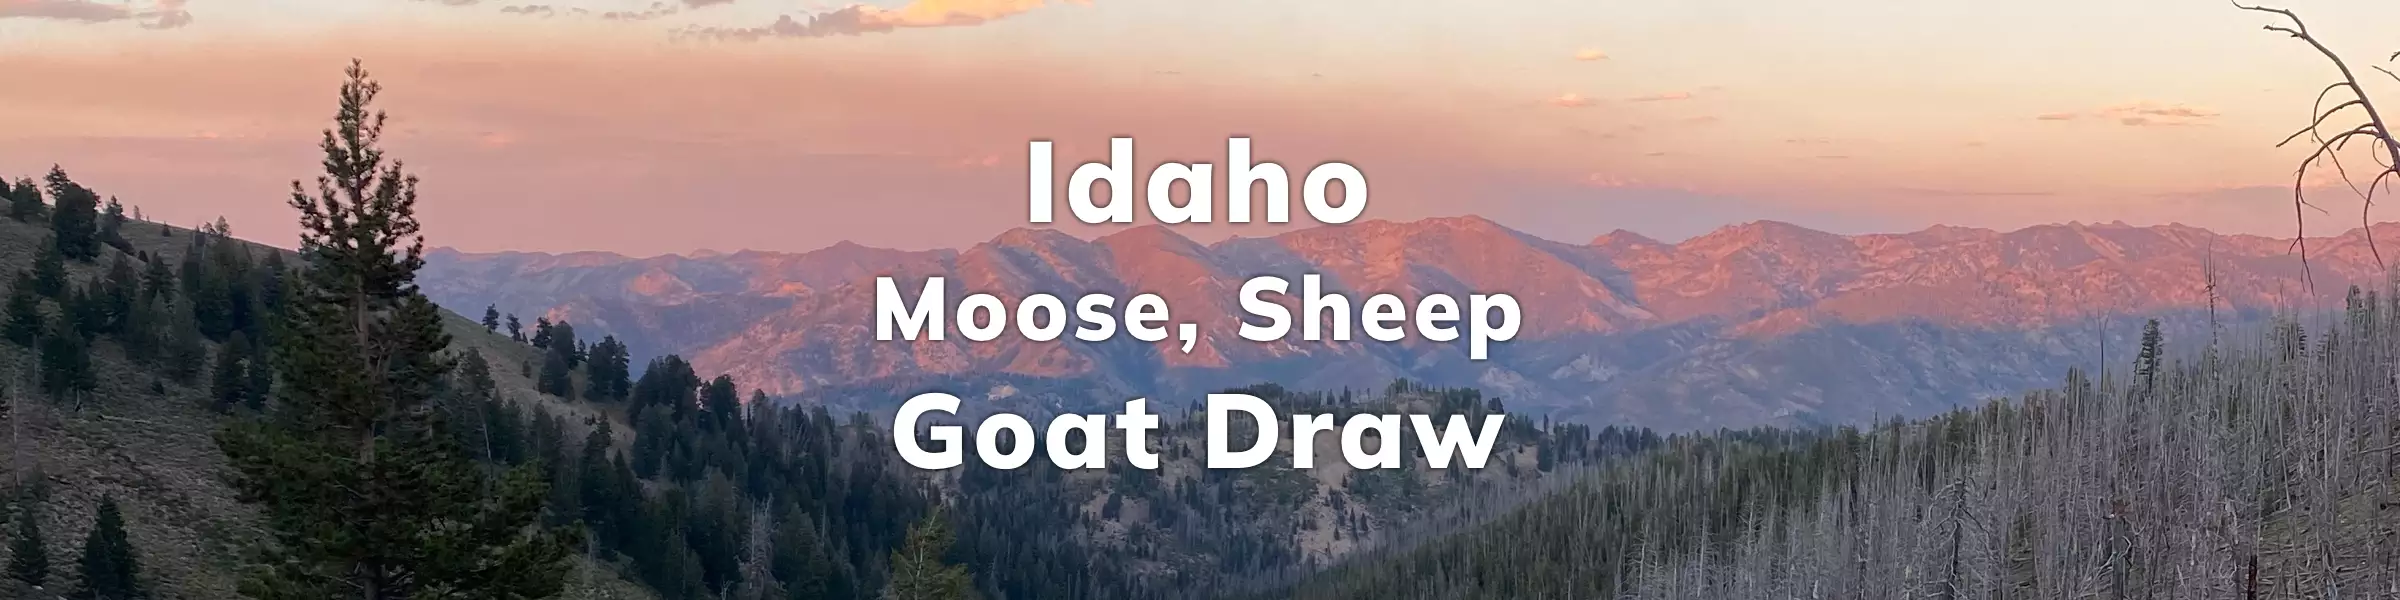 Idaho Moose Sheep Goat Draw